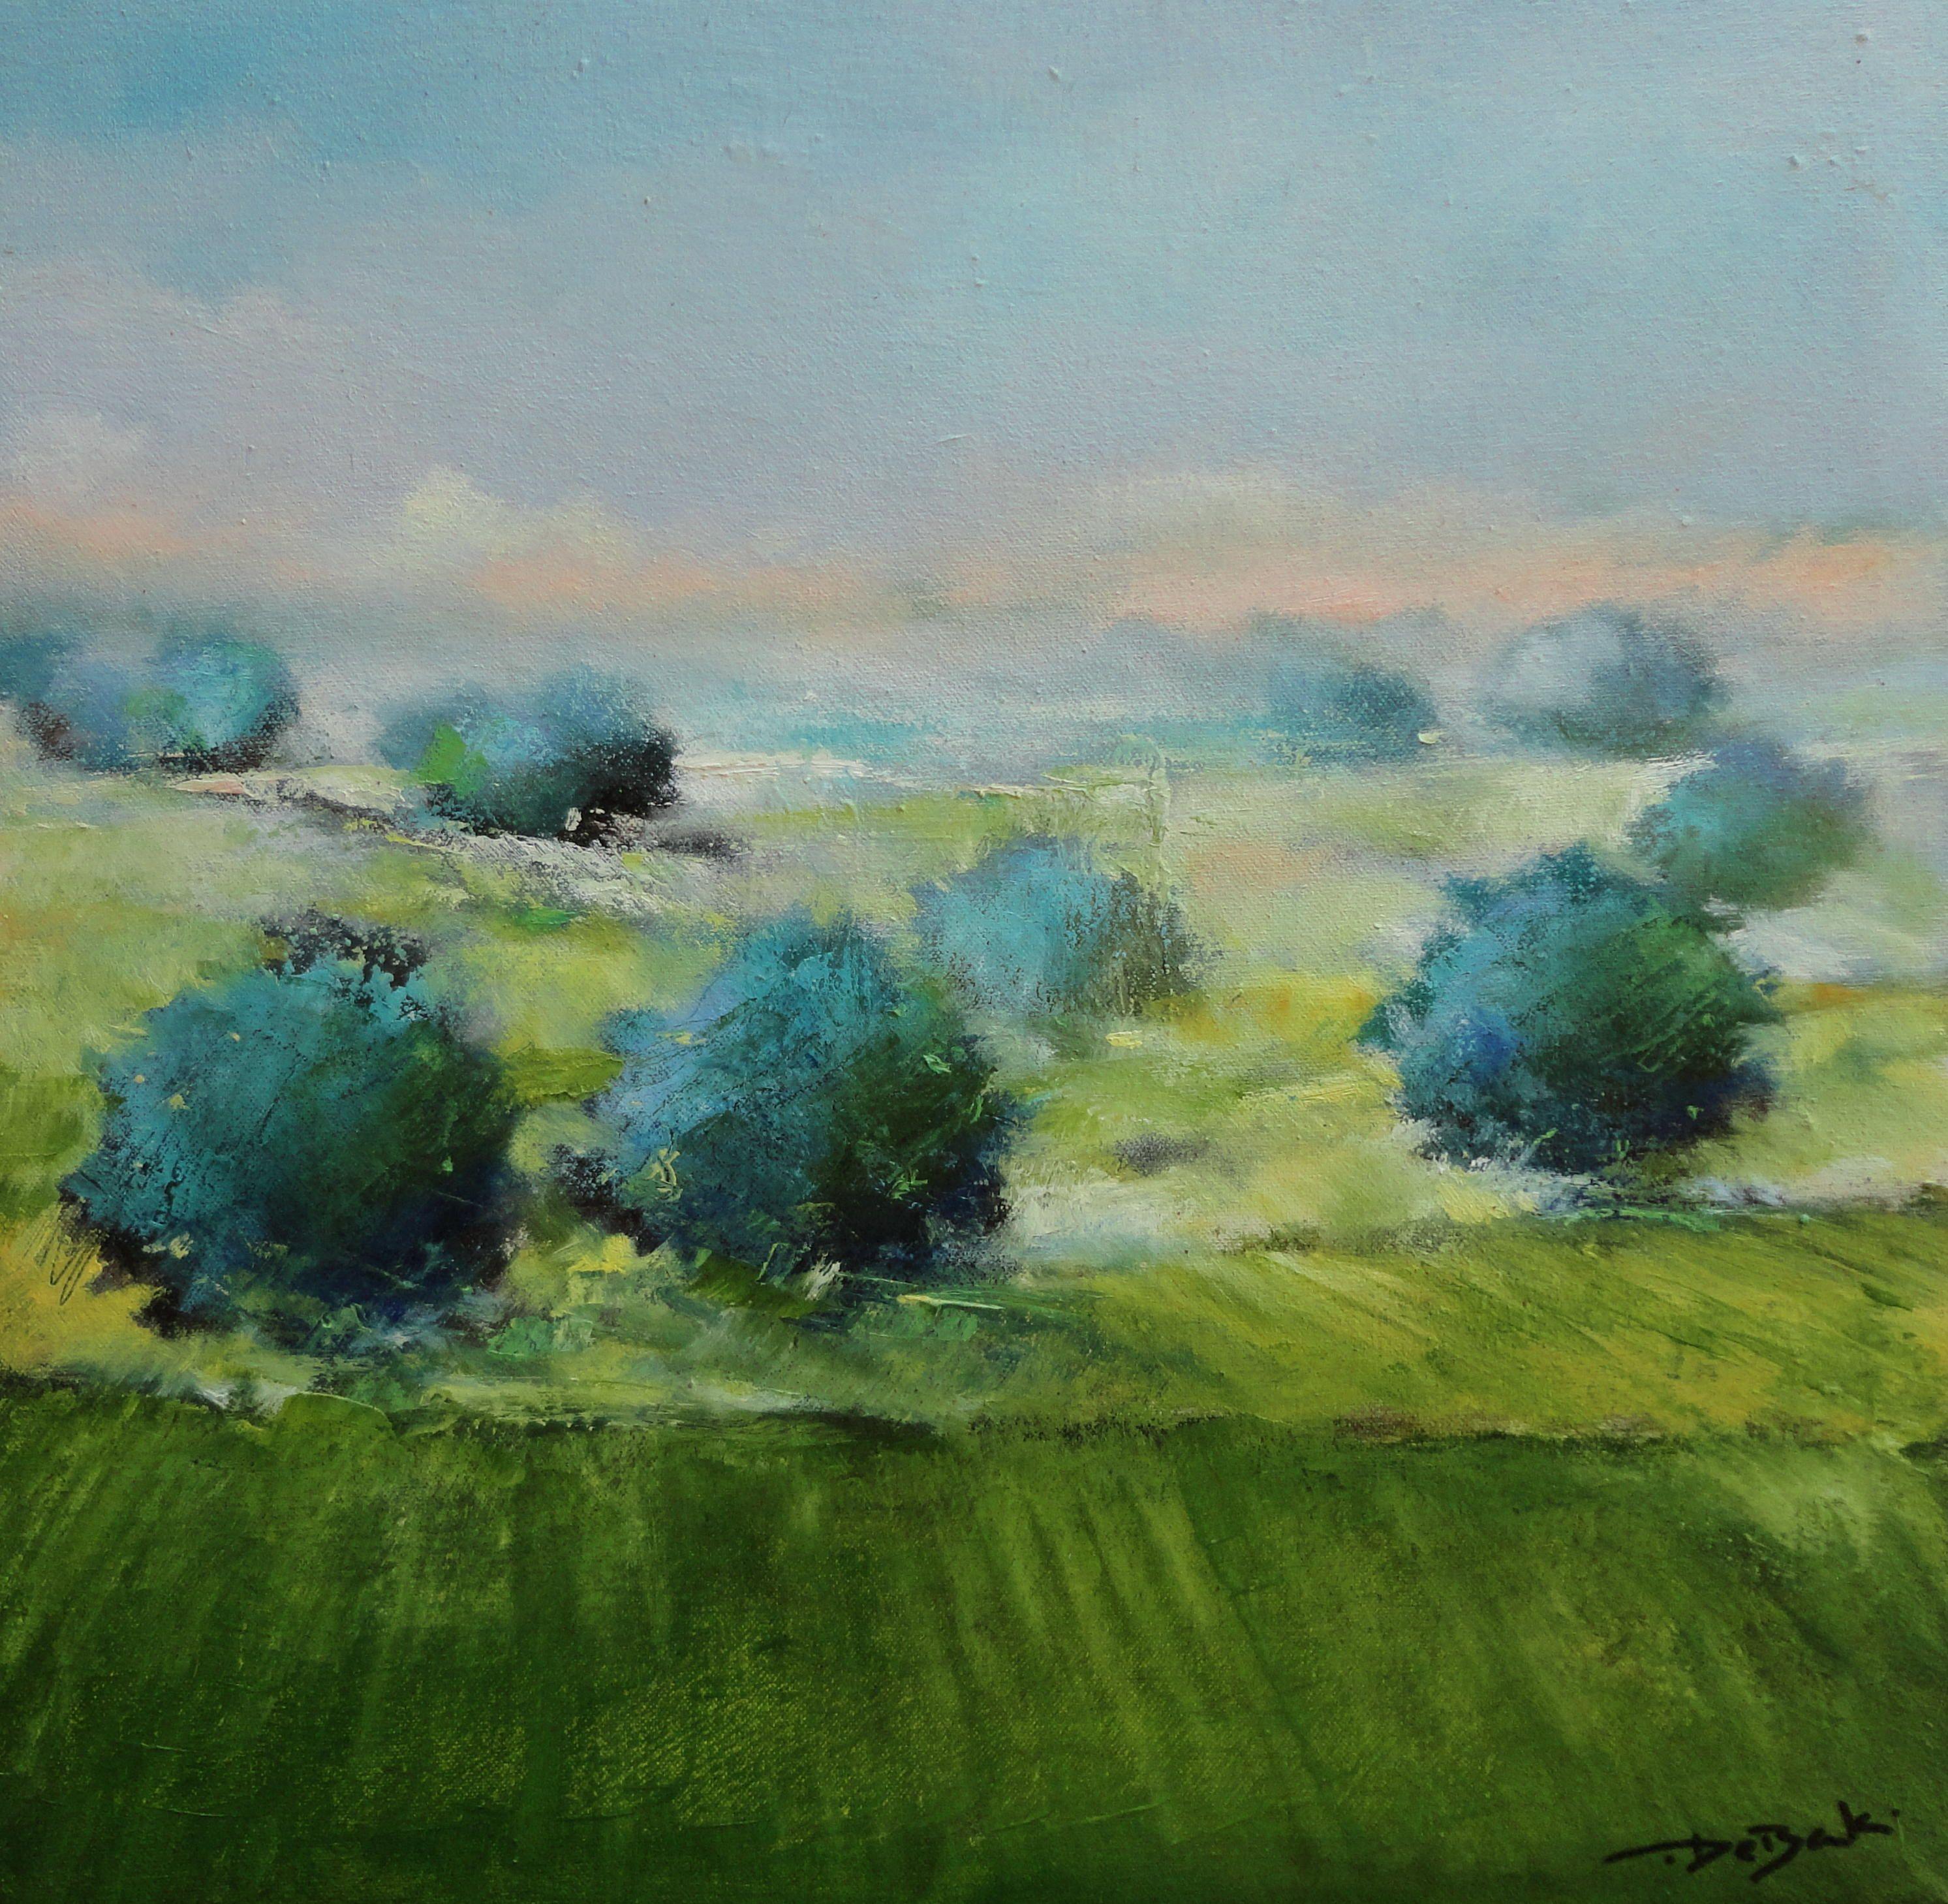 NC landscape, Painting, Oil on Canvas